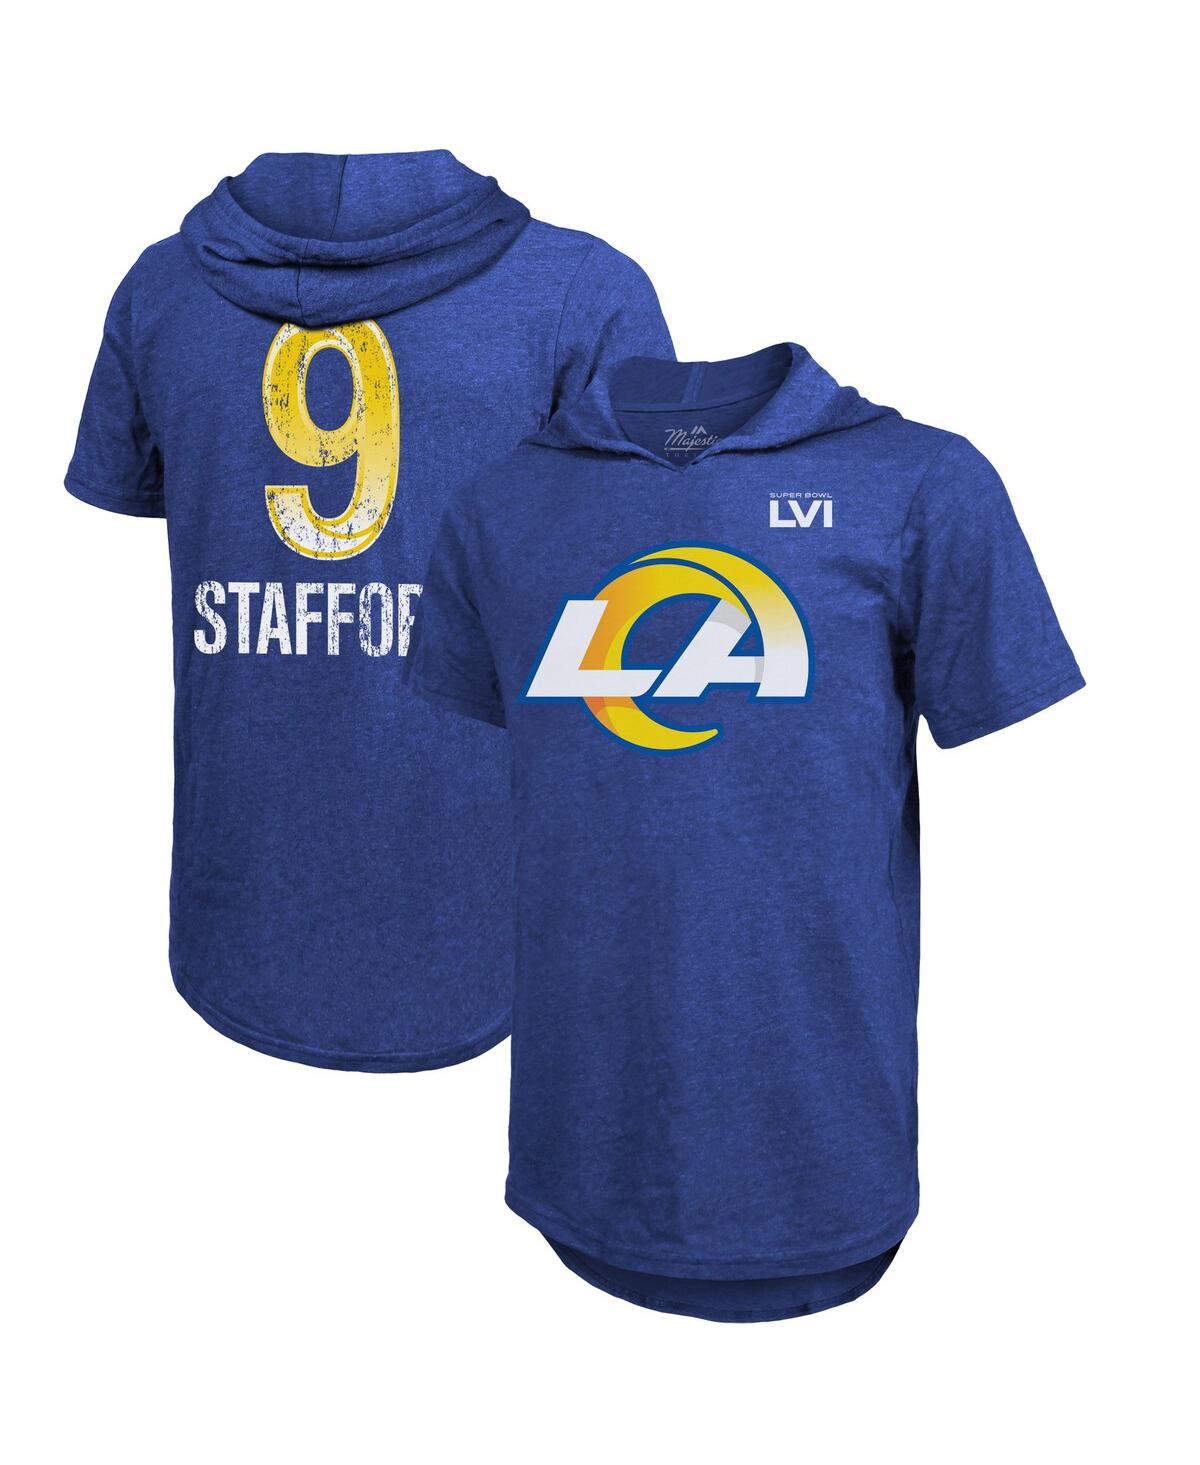 Men's Majestic Threads Matthew Stafford Royal Los Angeles Rams Super Bowl Lvi Name Number Short Sleeve Hoodie T-shirt - Royal